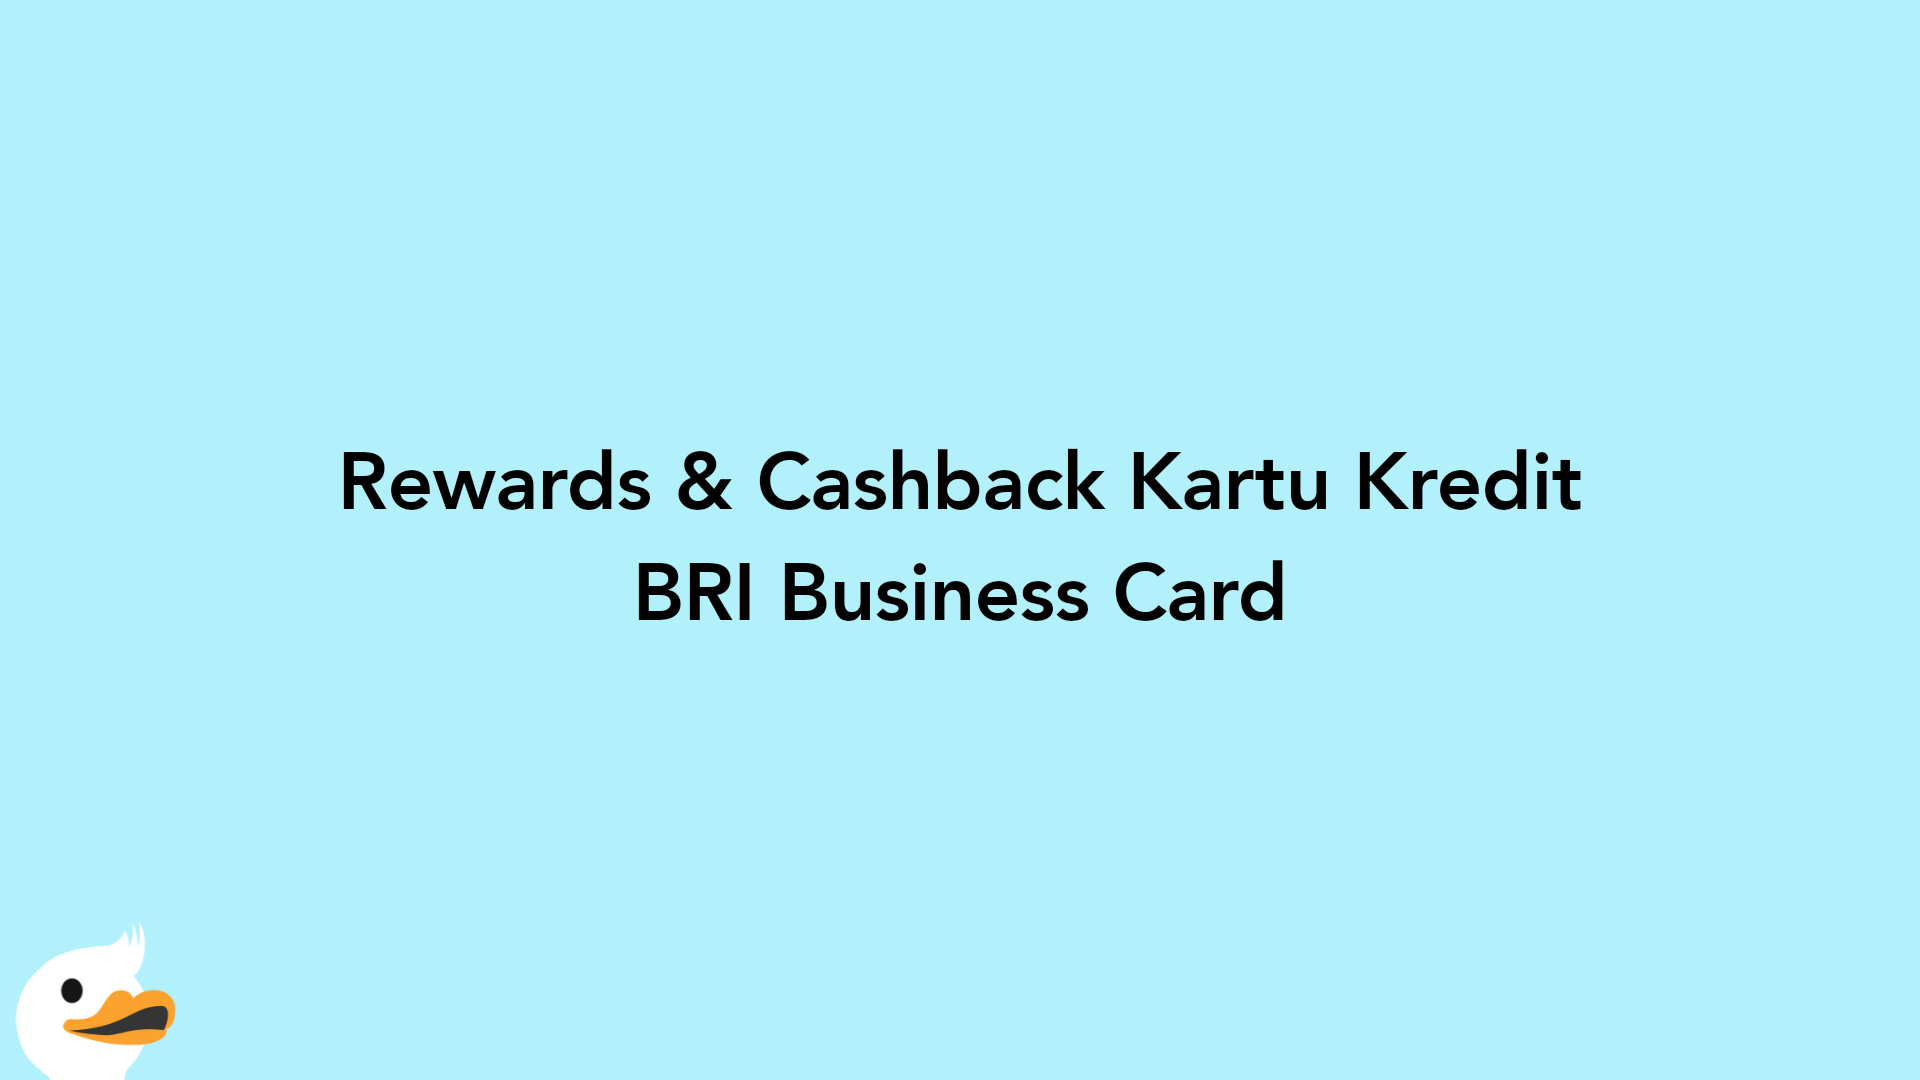 Rewards & Cashback Kartu Kredit BRI Business Card